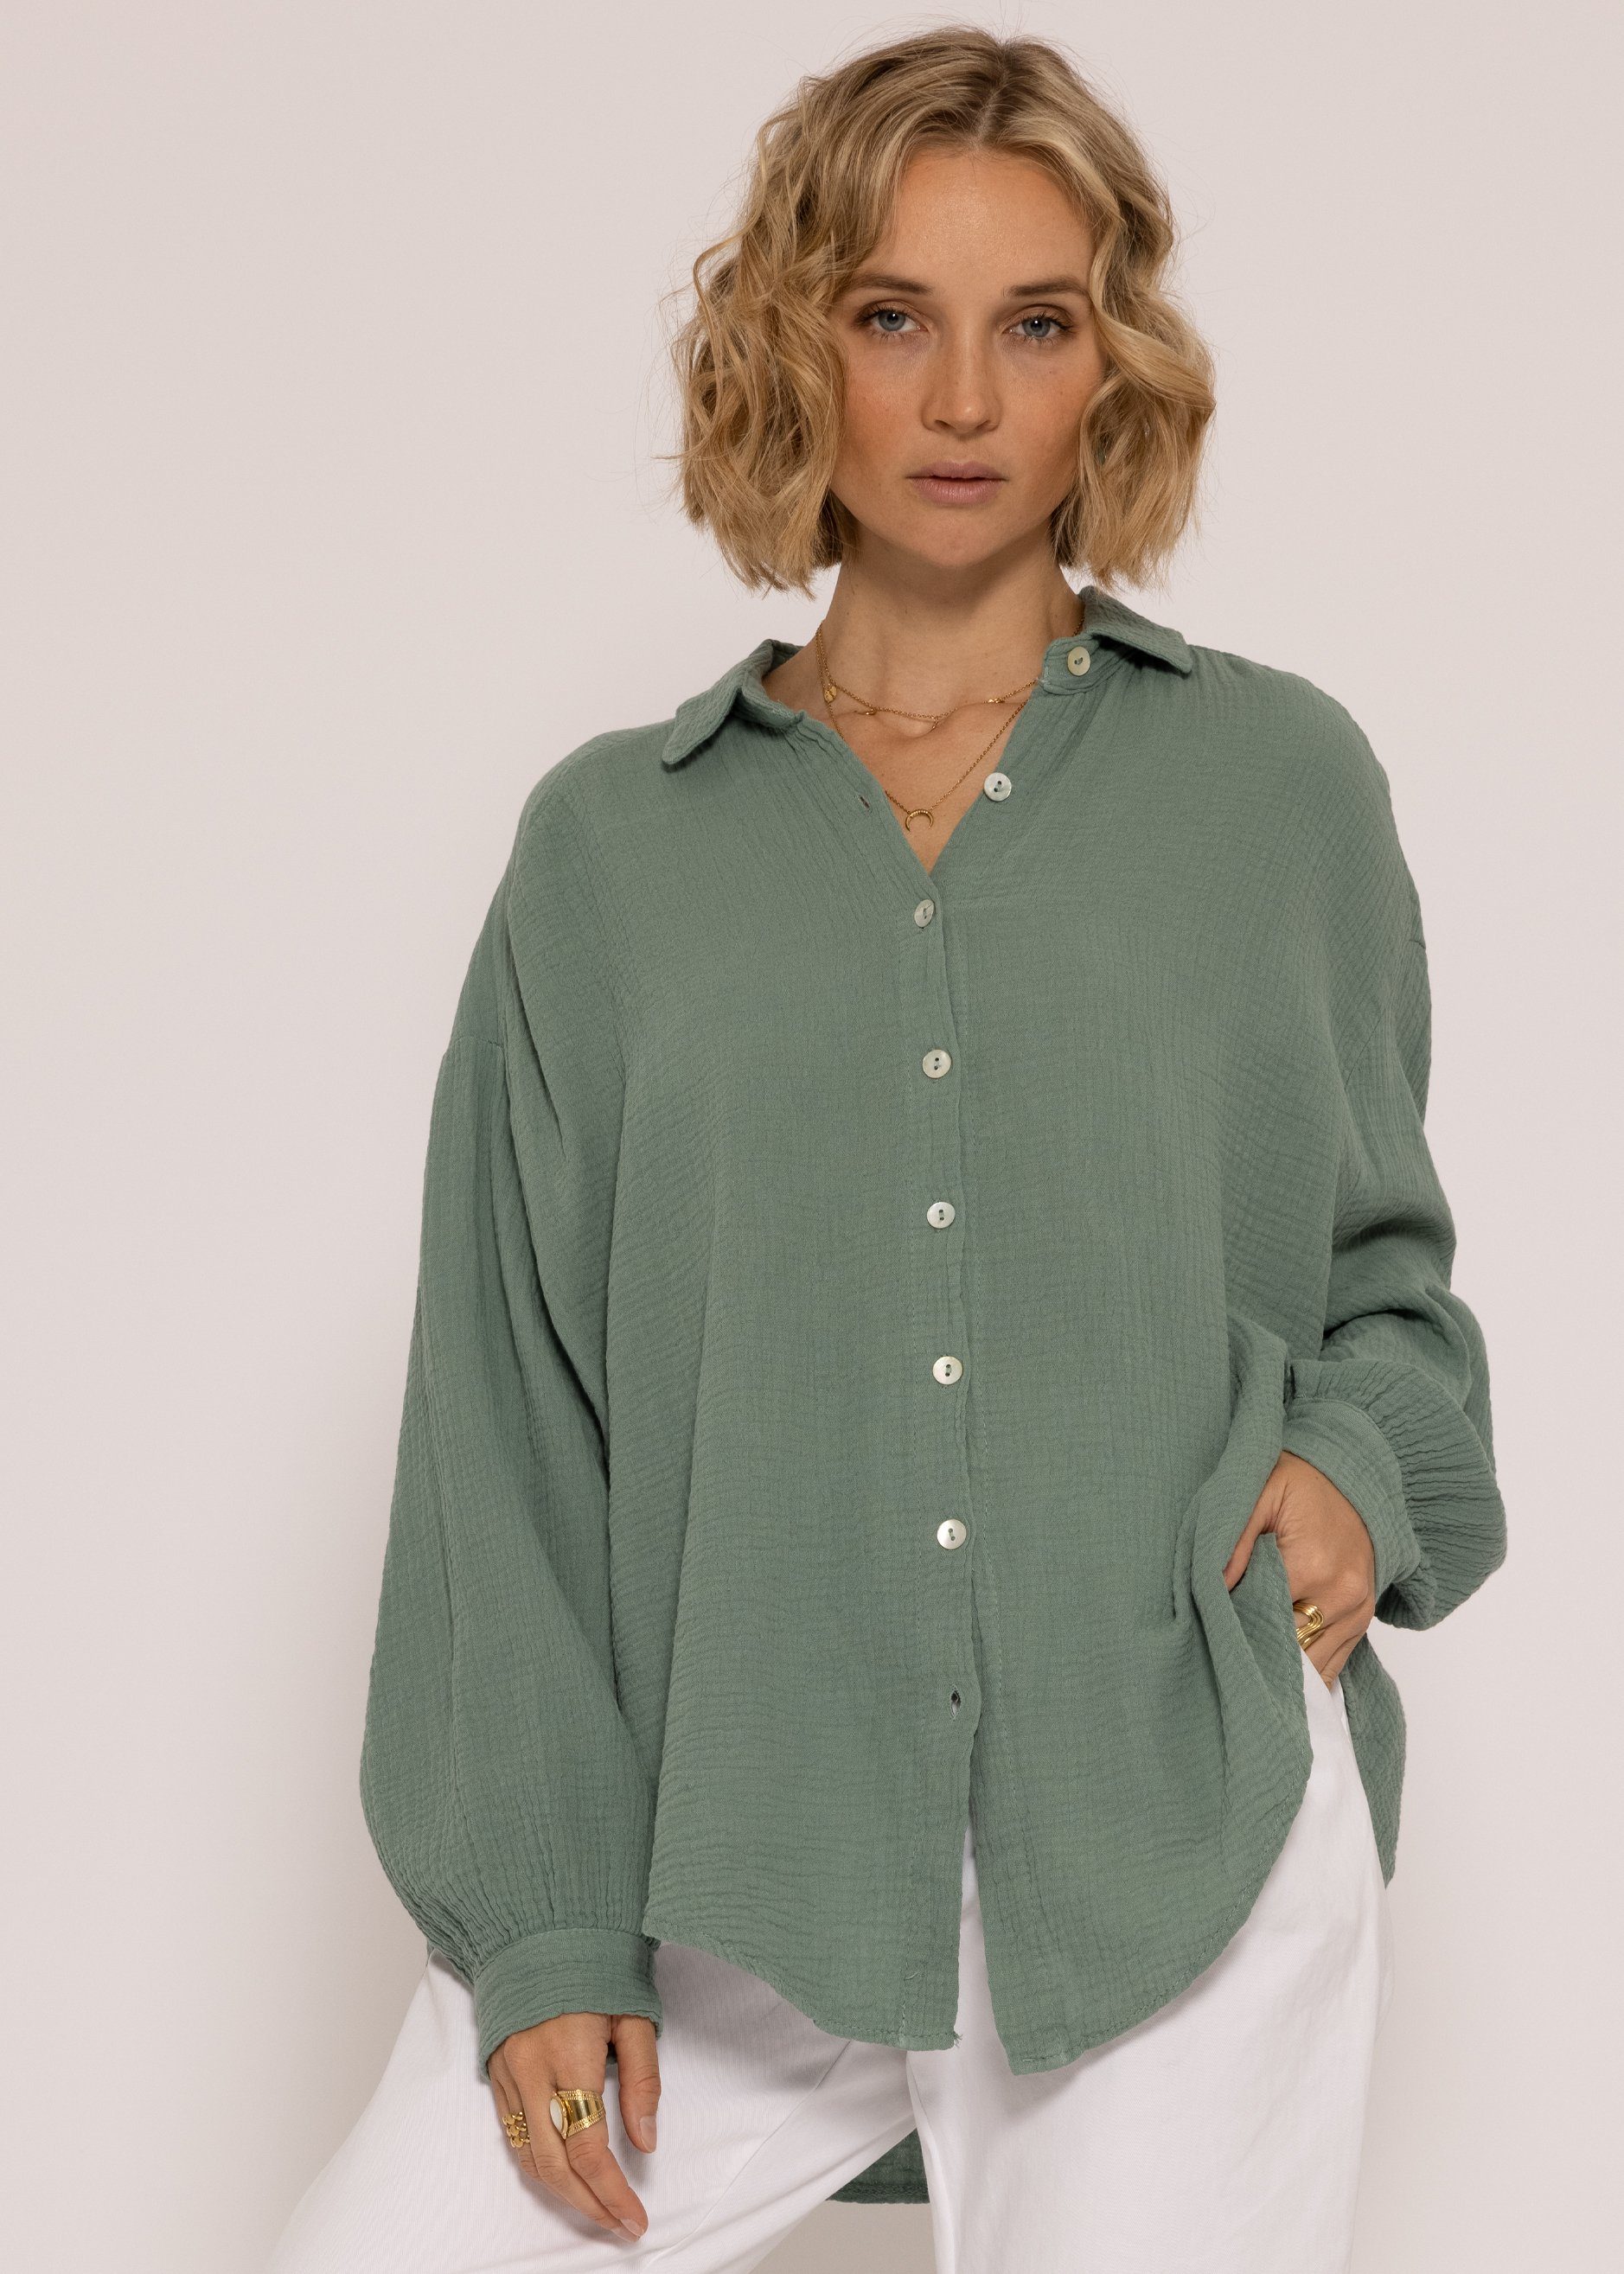 SASSYCLASSY Longbluse Oversize Musselin Bluse Damen Langarm Hemdbluse lang aus Baumwolle mit V-Ausschnitt, One Size (Gr. 36-48) Grün